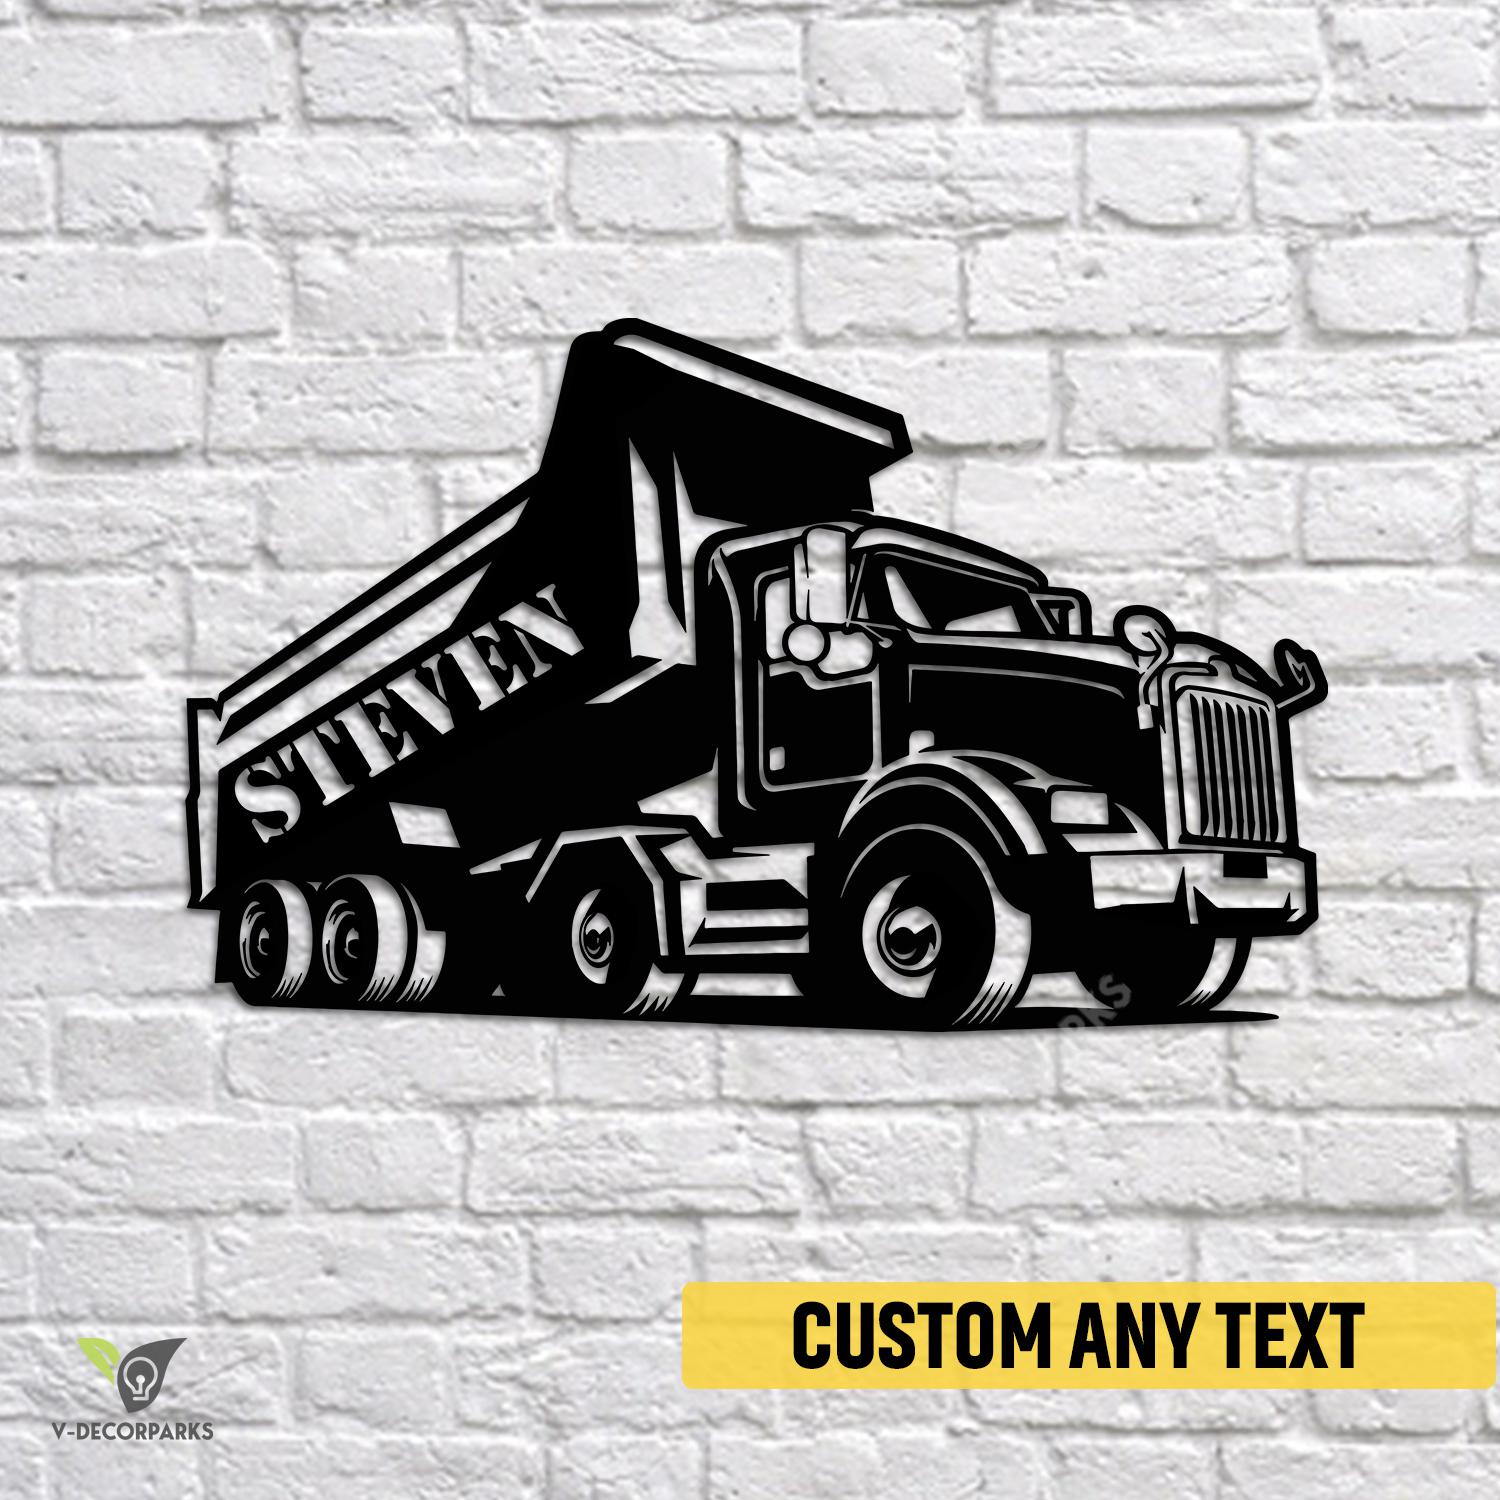 Personalized Dump Truck Metal Art, Dump Truck Construction Cutout Artwork For Father